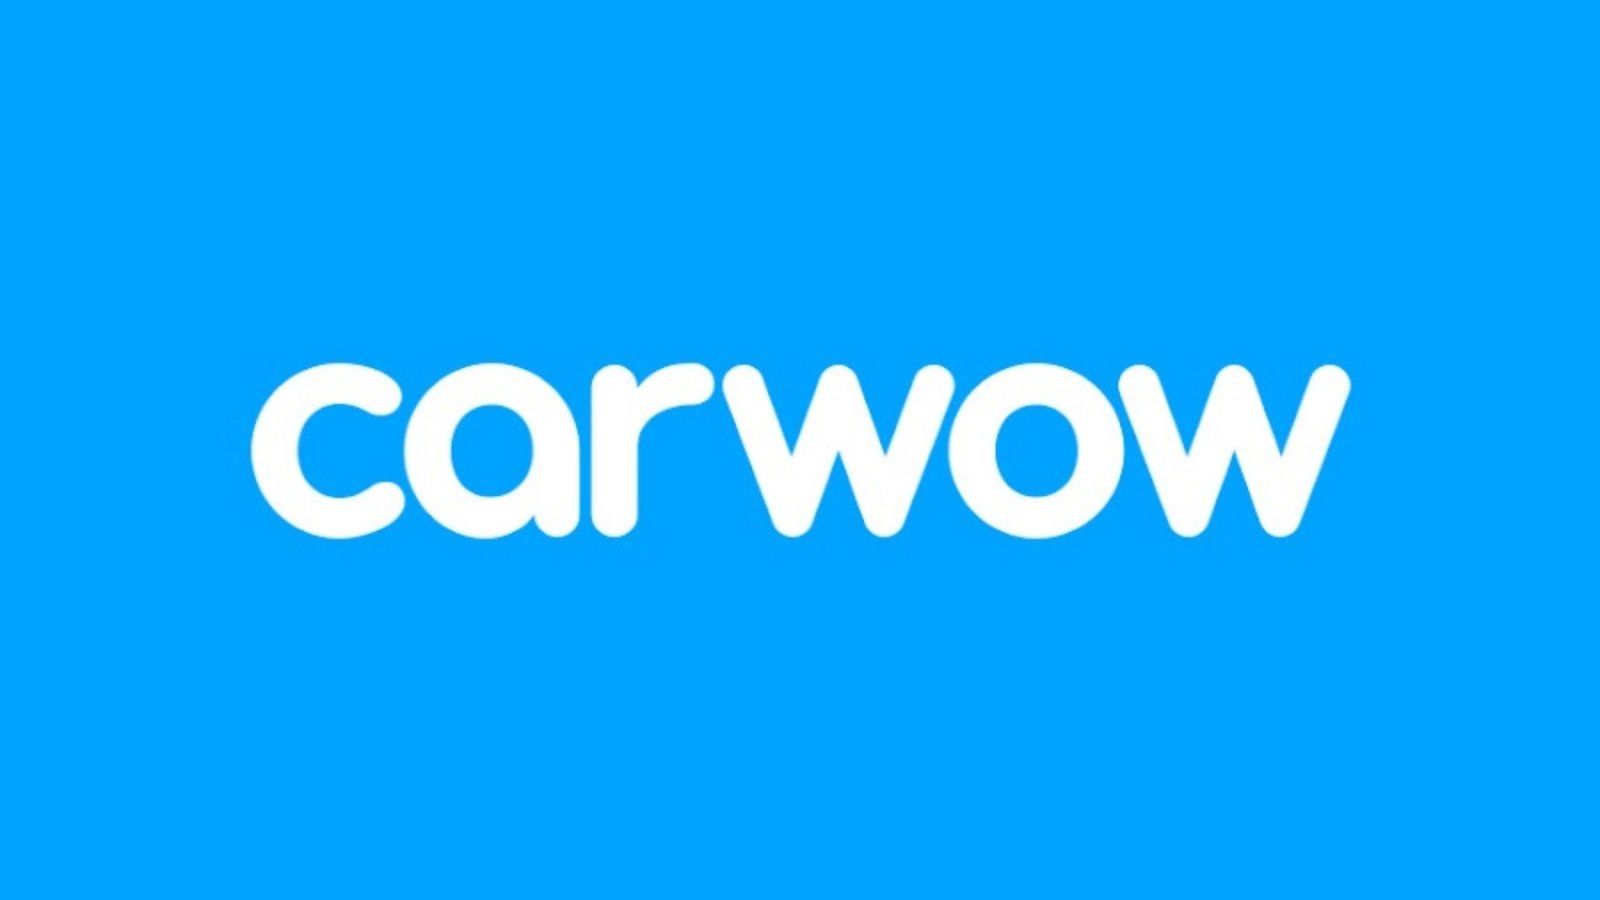 Opinión sobre Carwow: ¿Te planteas comprar un automóvil en un futuro próximo?